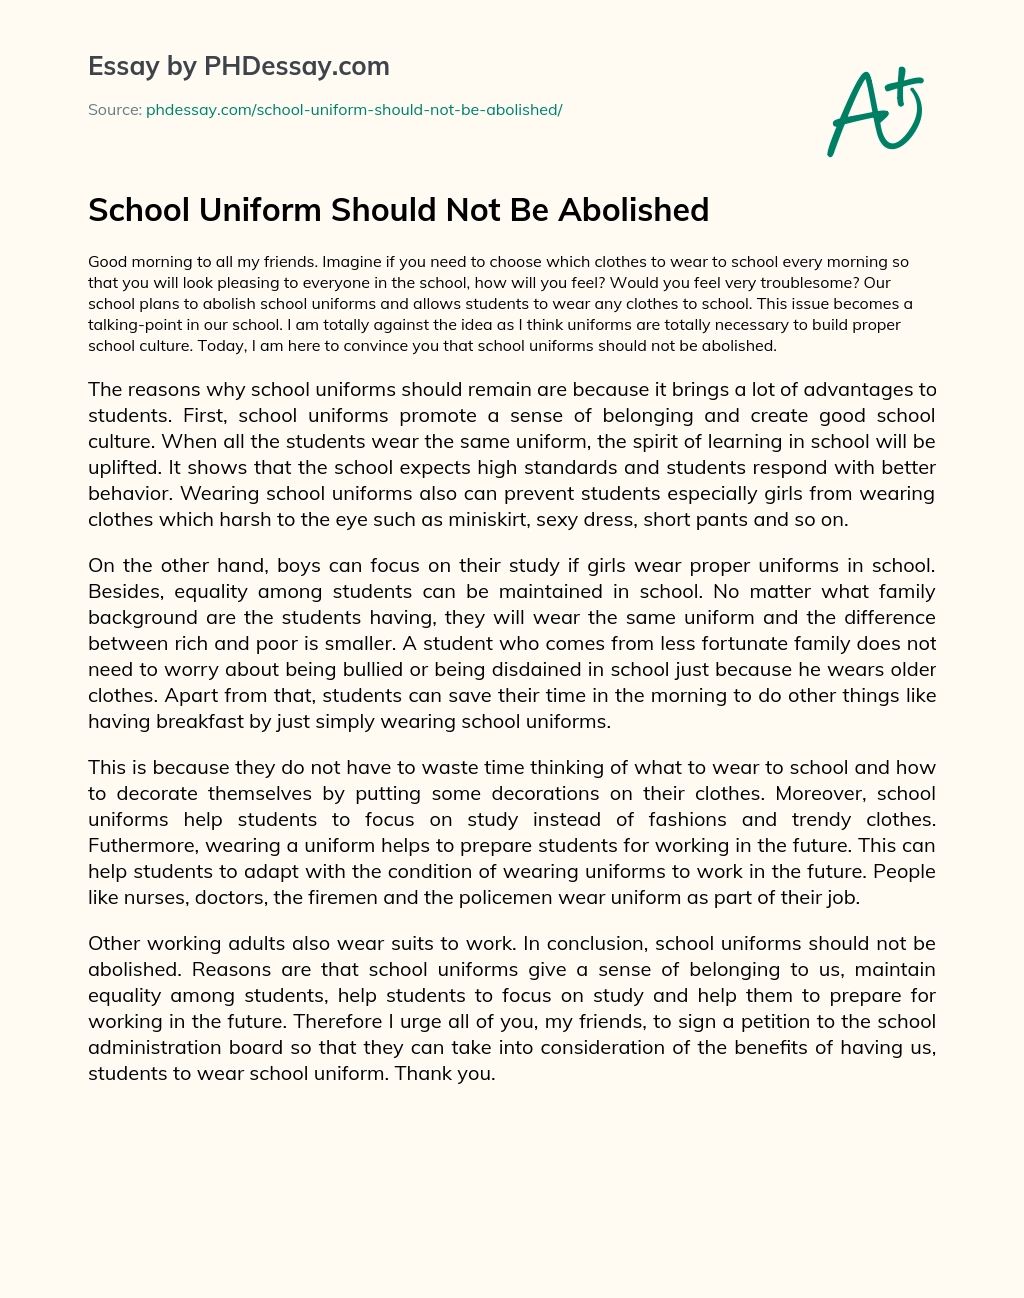 School Uniform Should Not Be Abolished essay